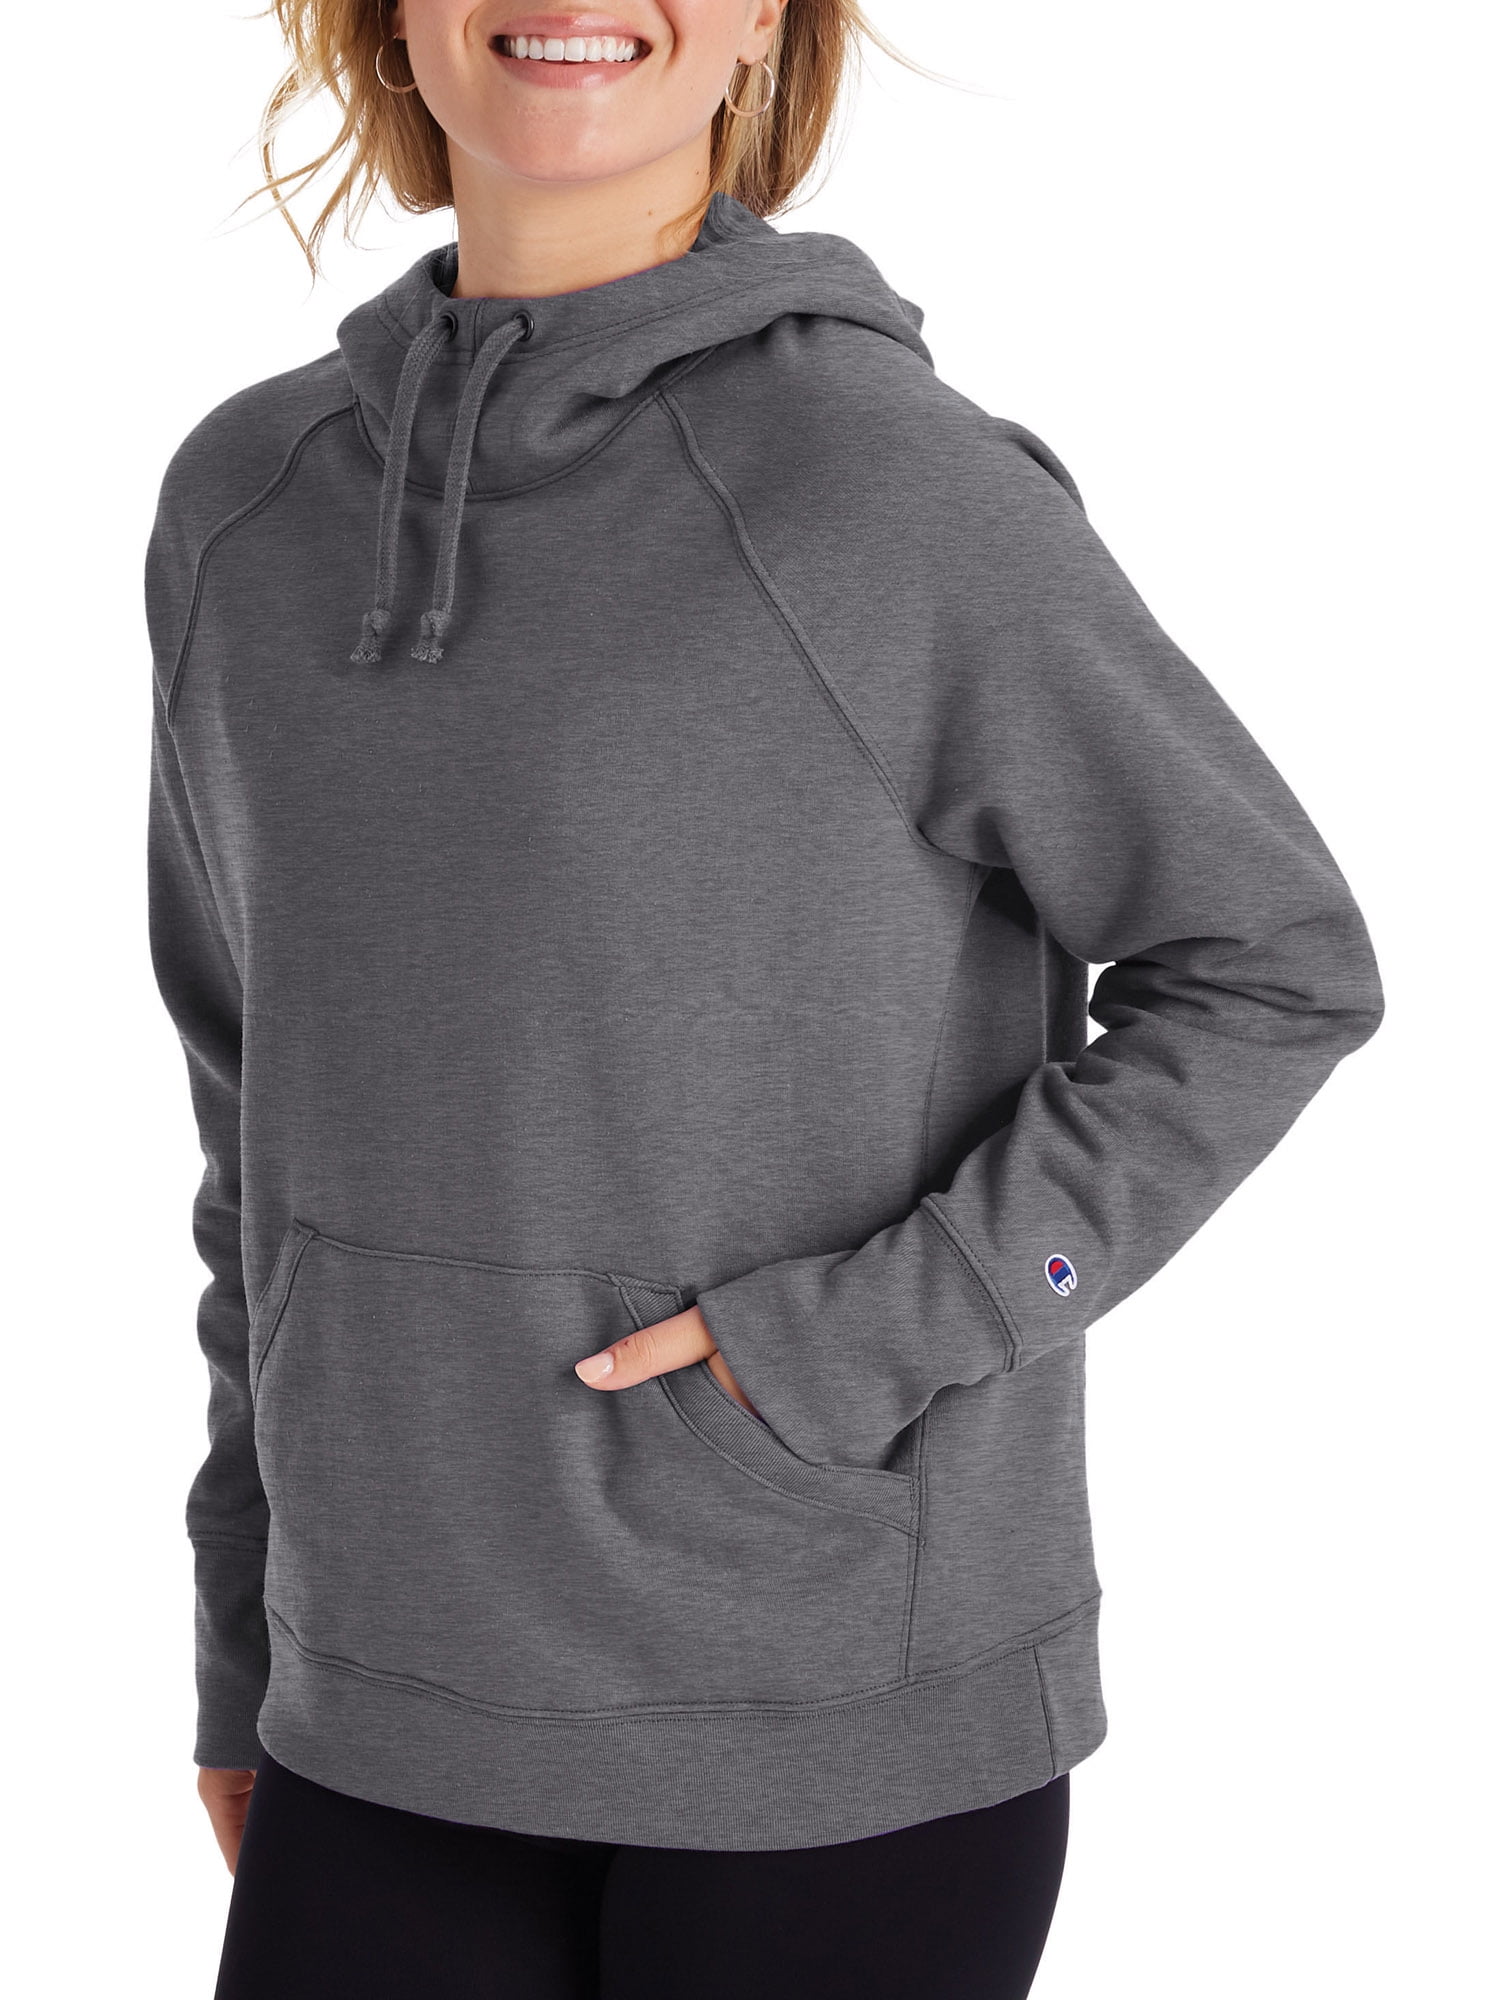 Champion Hoodie Women's Sweatshirt Powerblend Full Zip Scuba hood Pockets XS-2XL 